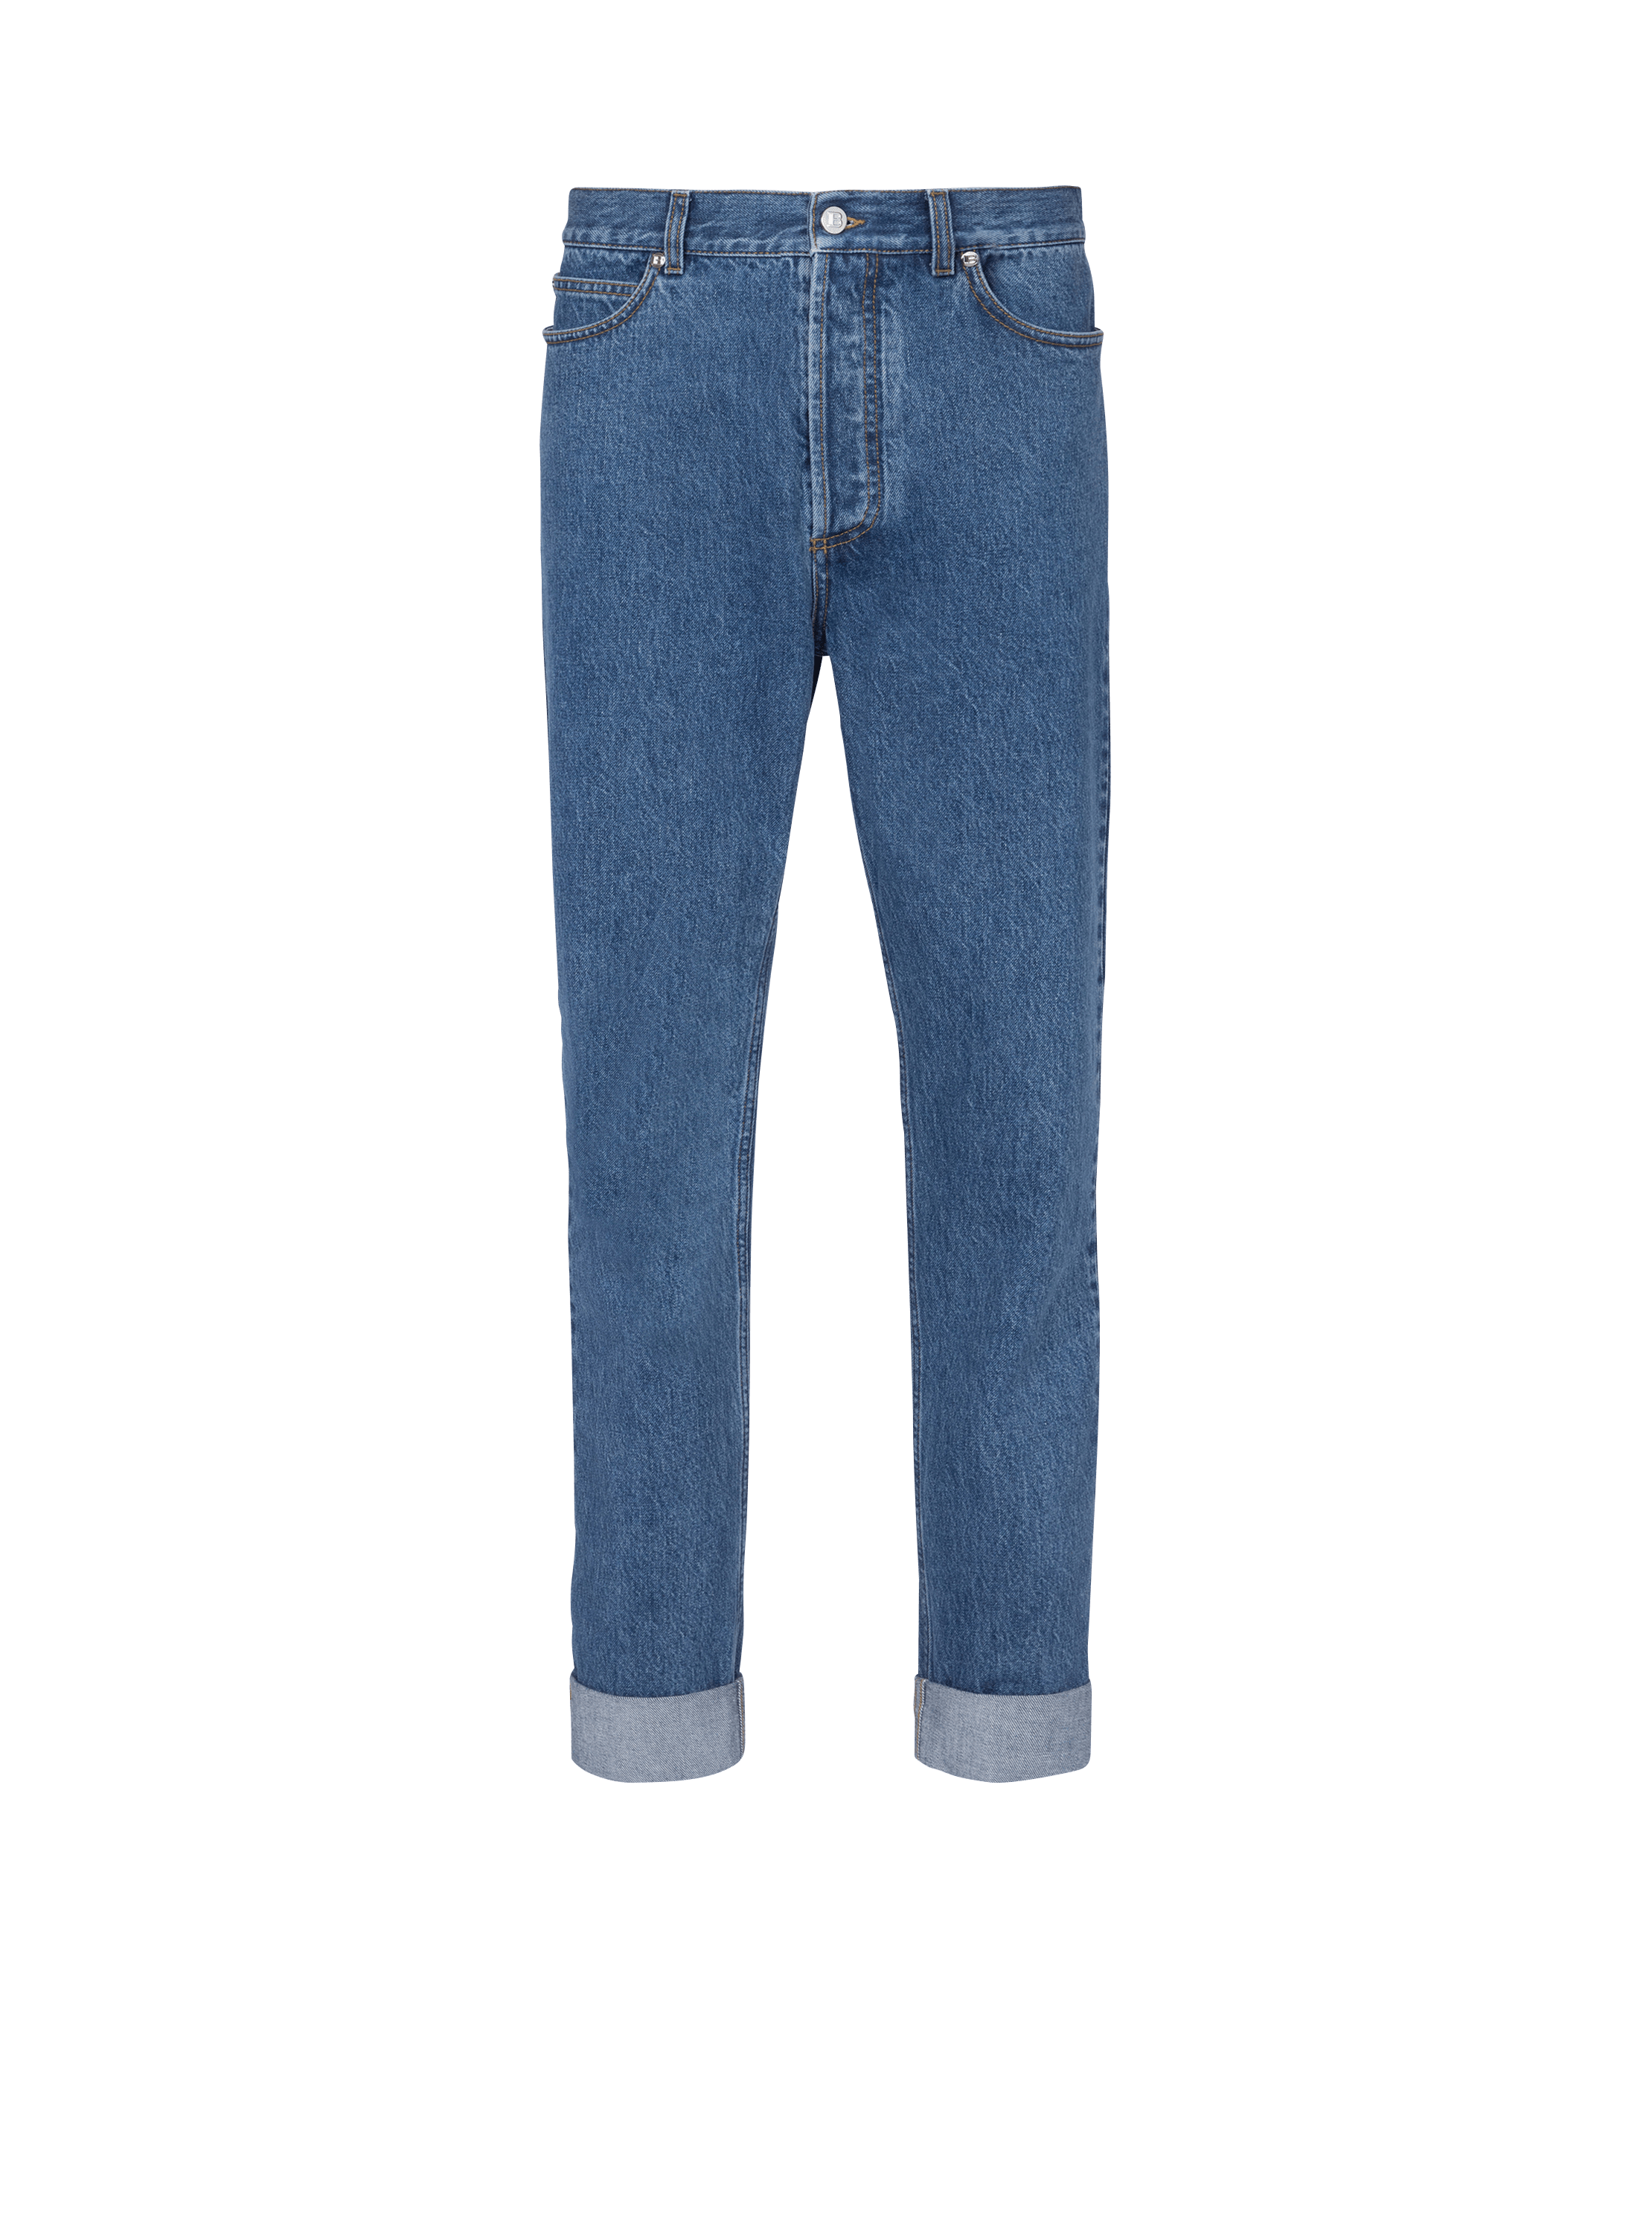 Balmain x Stranger Things - Straight jeans with hems